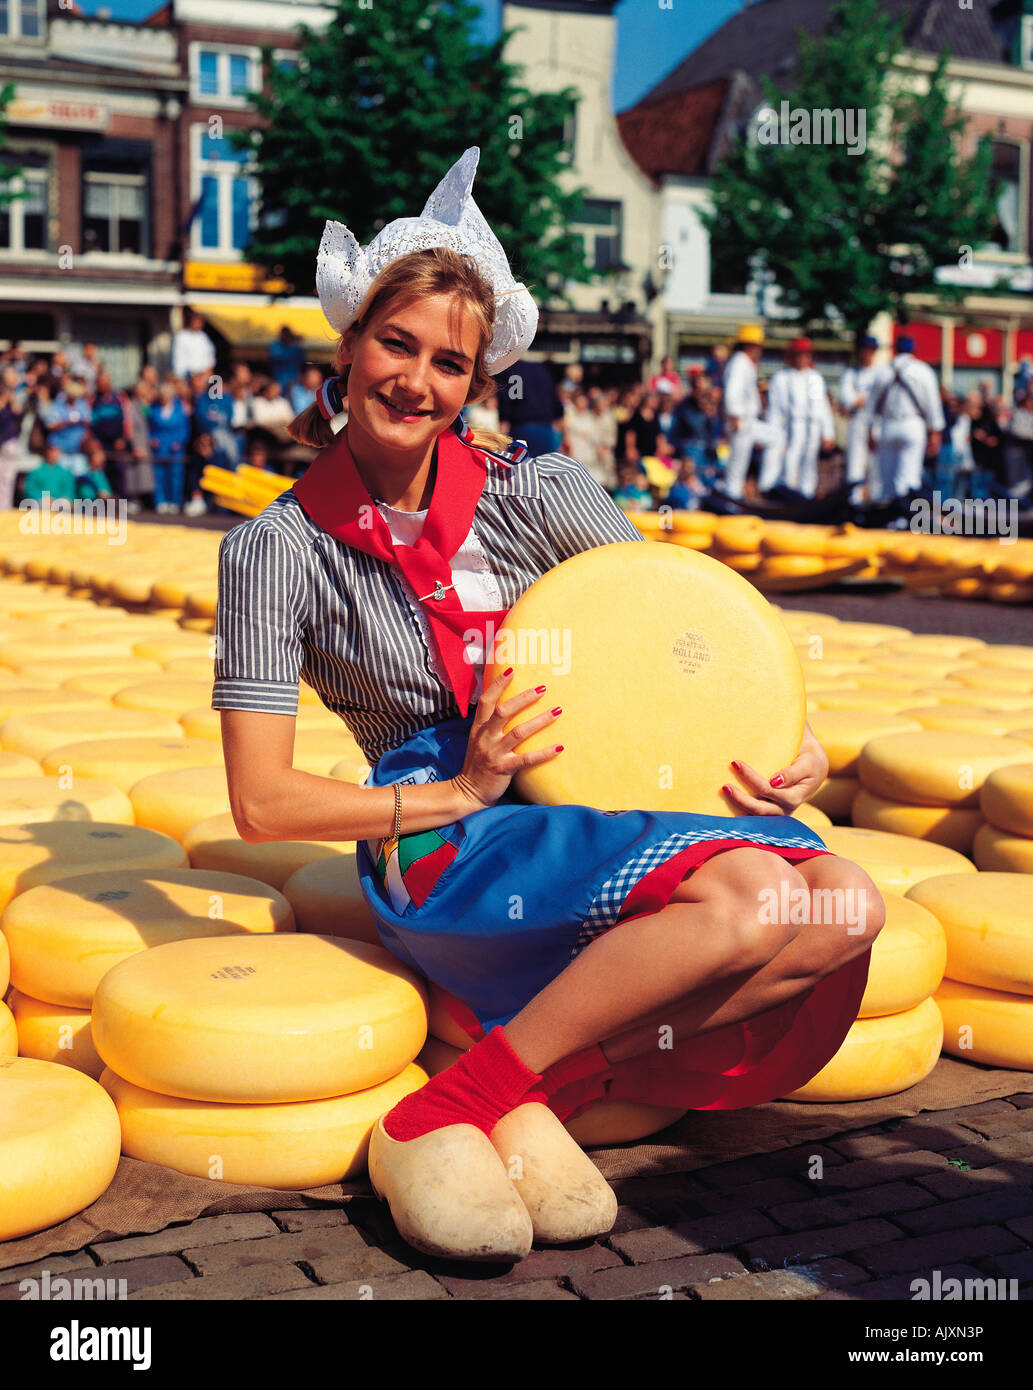 Netherlands. Amsterdam, Alkmaar, Cheese market, Woman in traditional ...